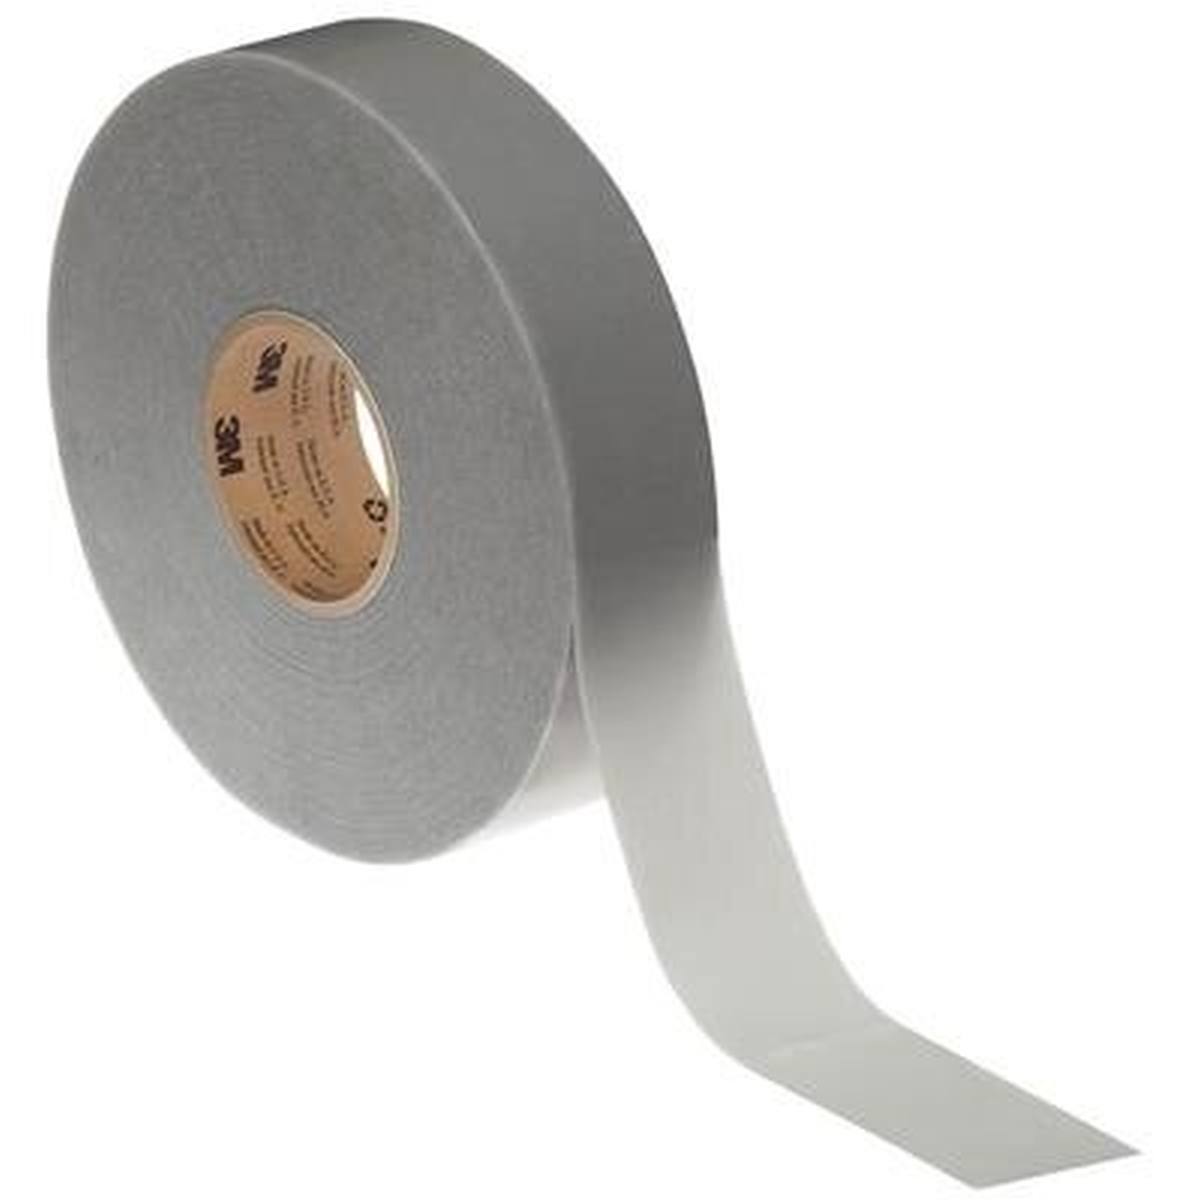 3M high-performance sealing tape 4411G, 75 mm x 16.5 m, 1 mm, gray